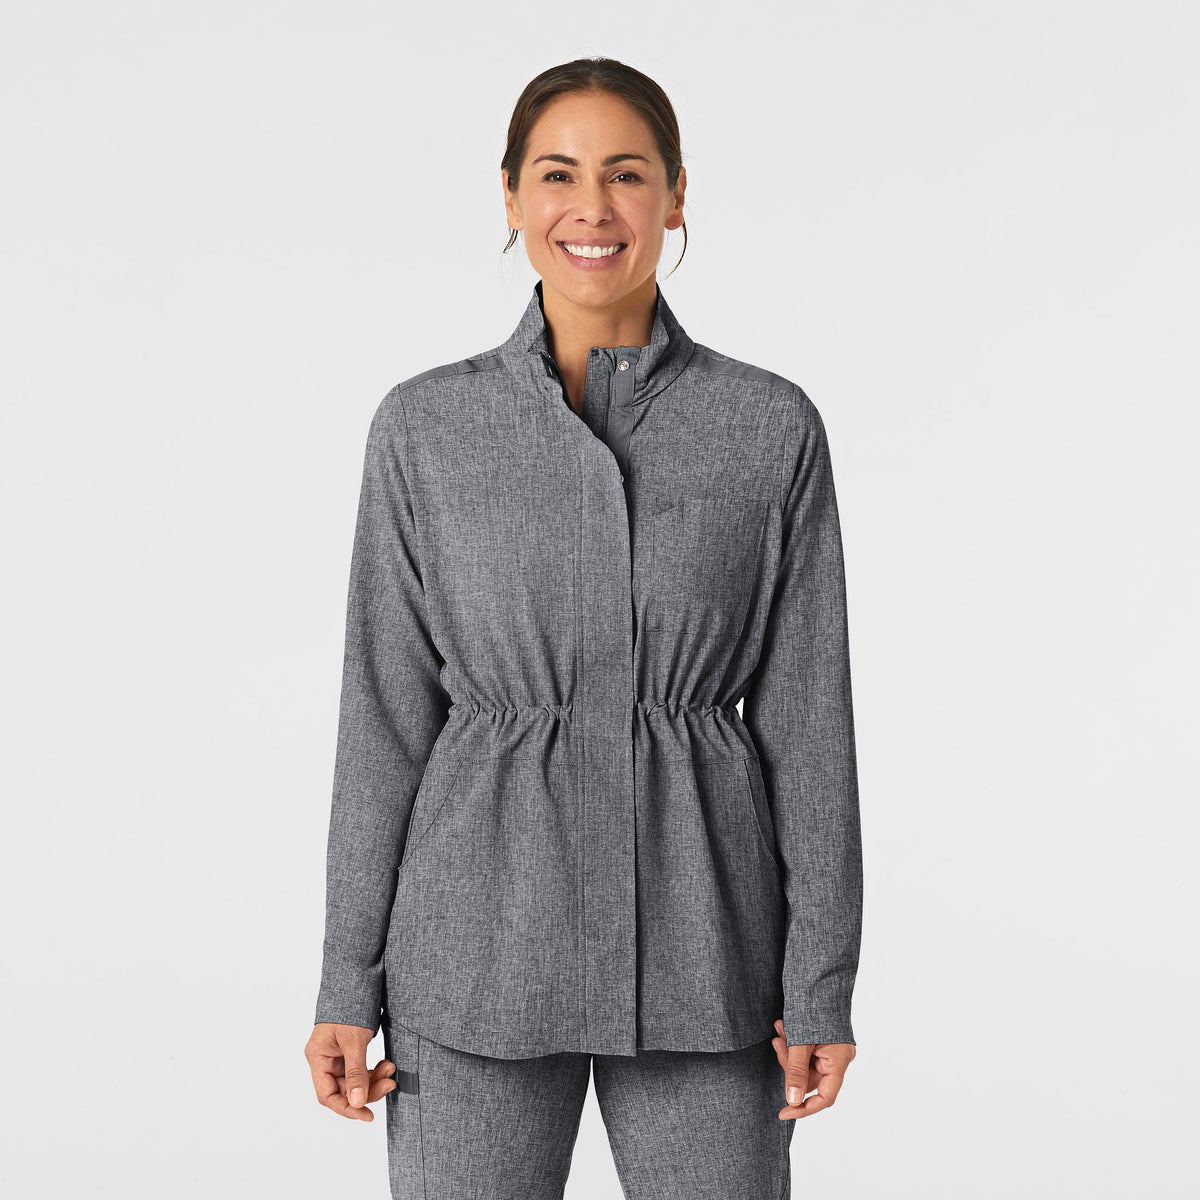 RENEW Women's Convertible Hood Fashion Jacket - Grey Heather